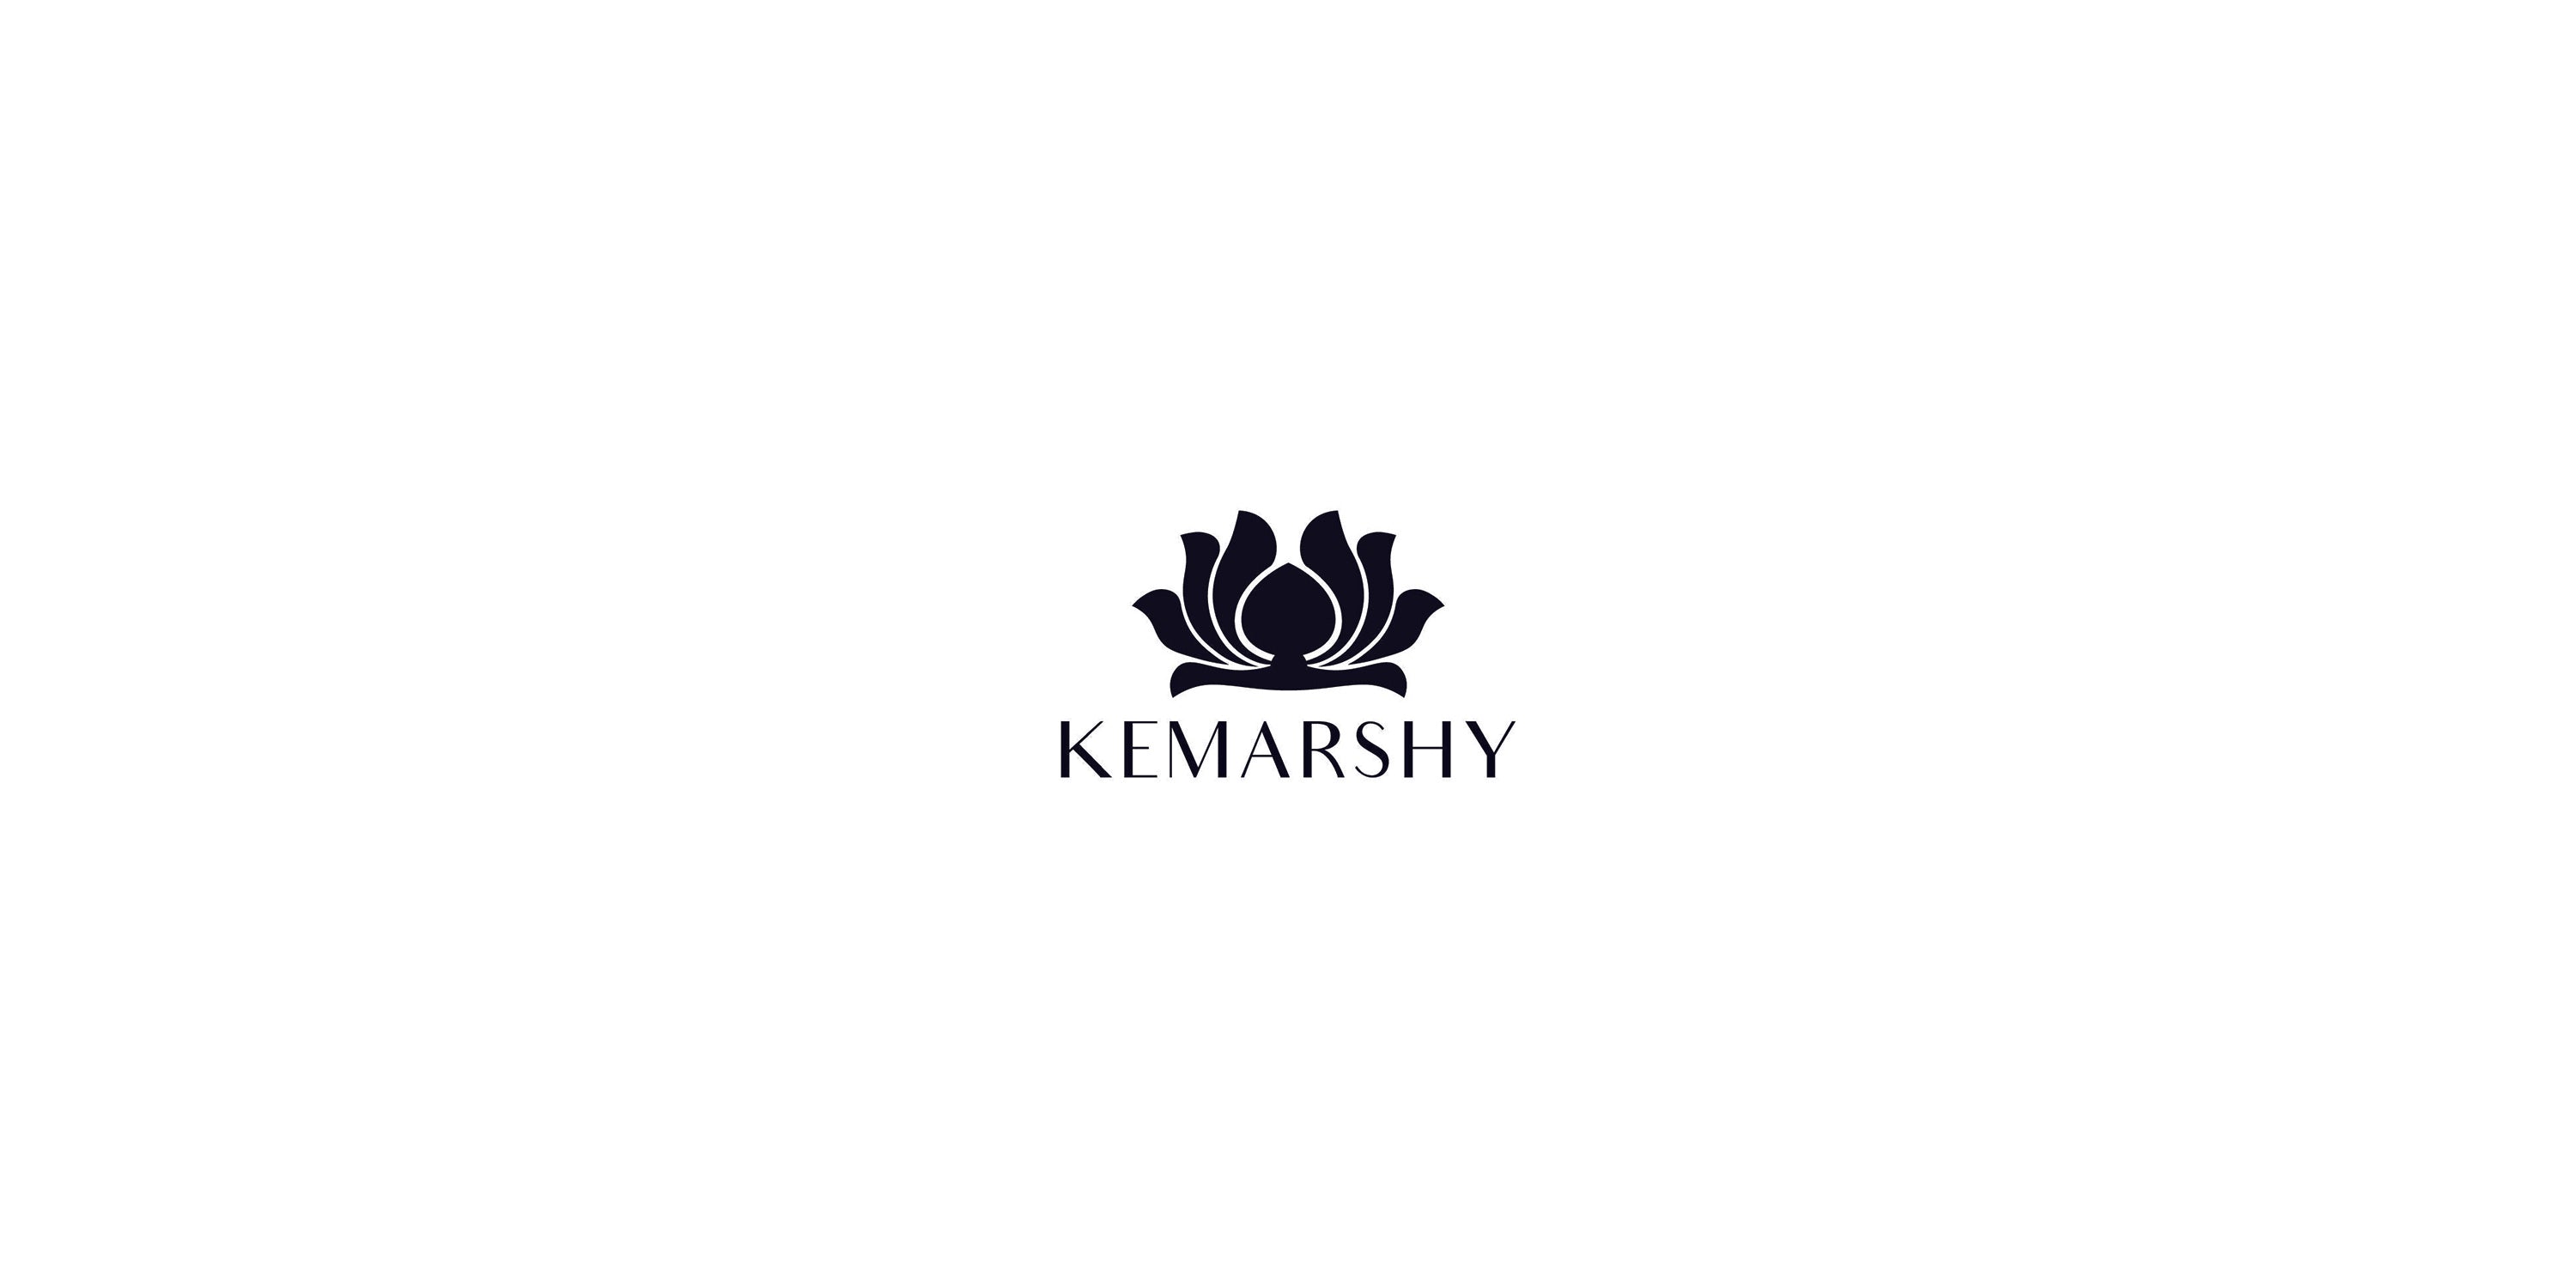 Kemarshy logo